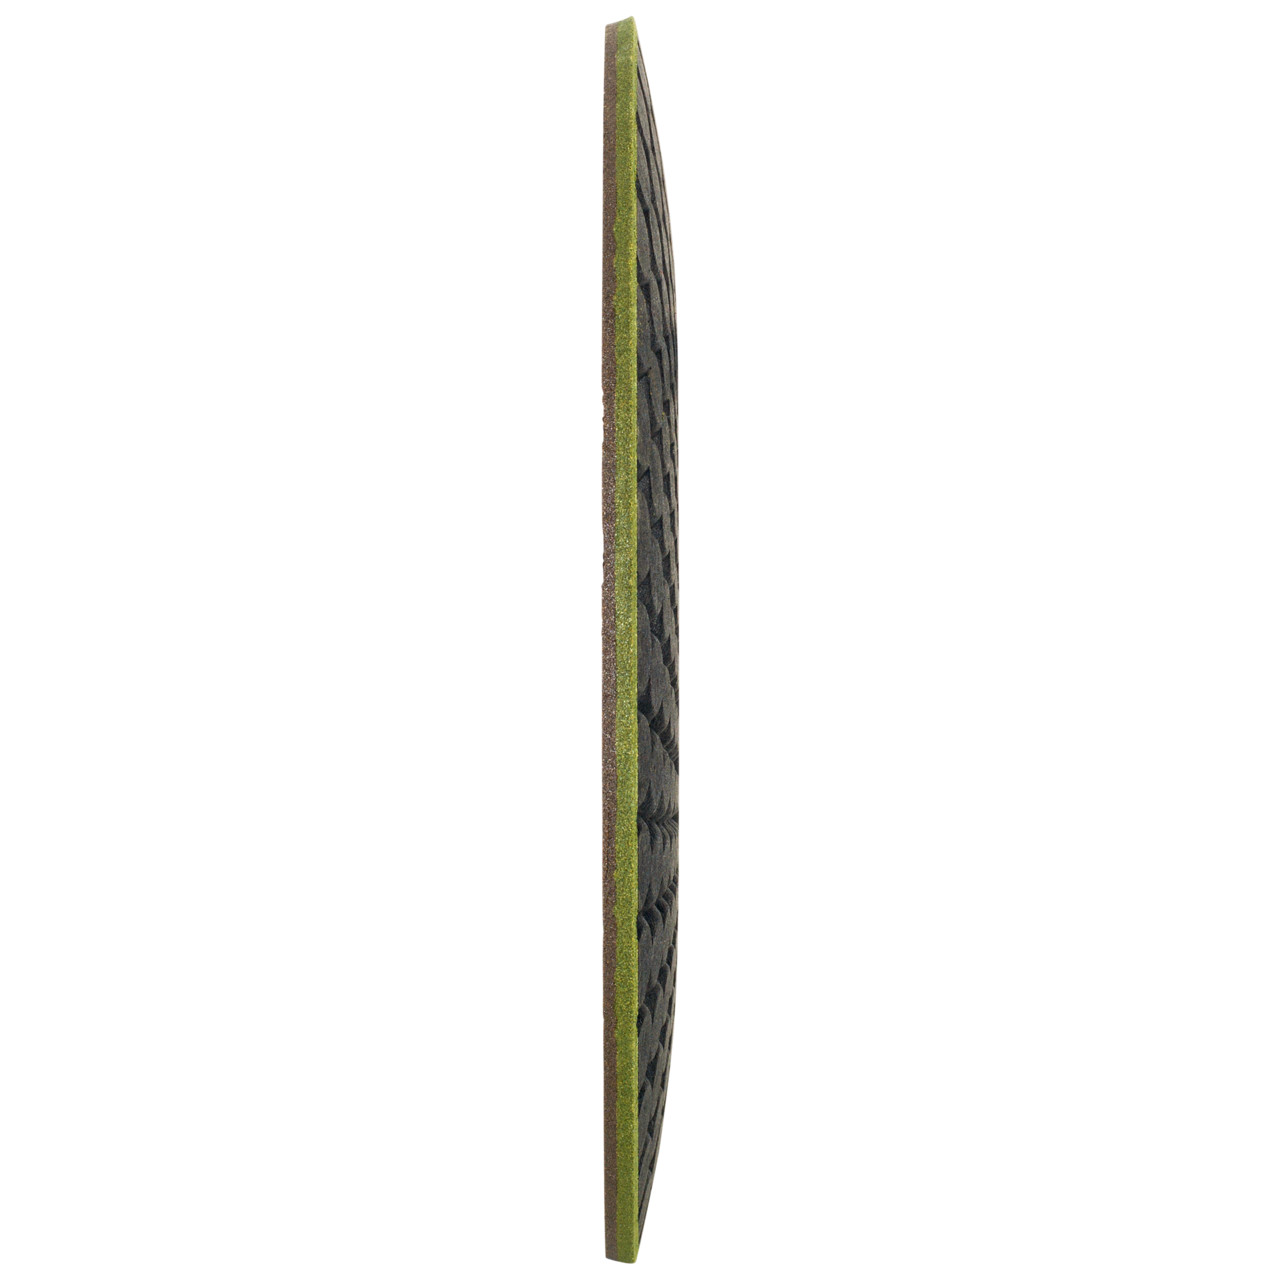 TYROLIT RONDELLER DxH 178x22.23 Para piedra, forma: 29RON (Rondeller®), Art. 908220